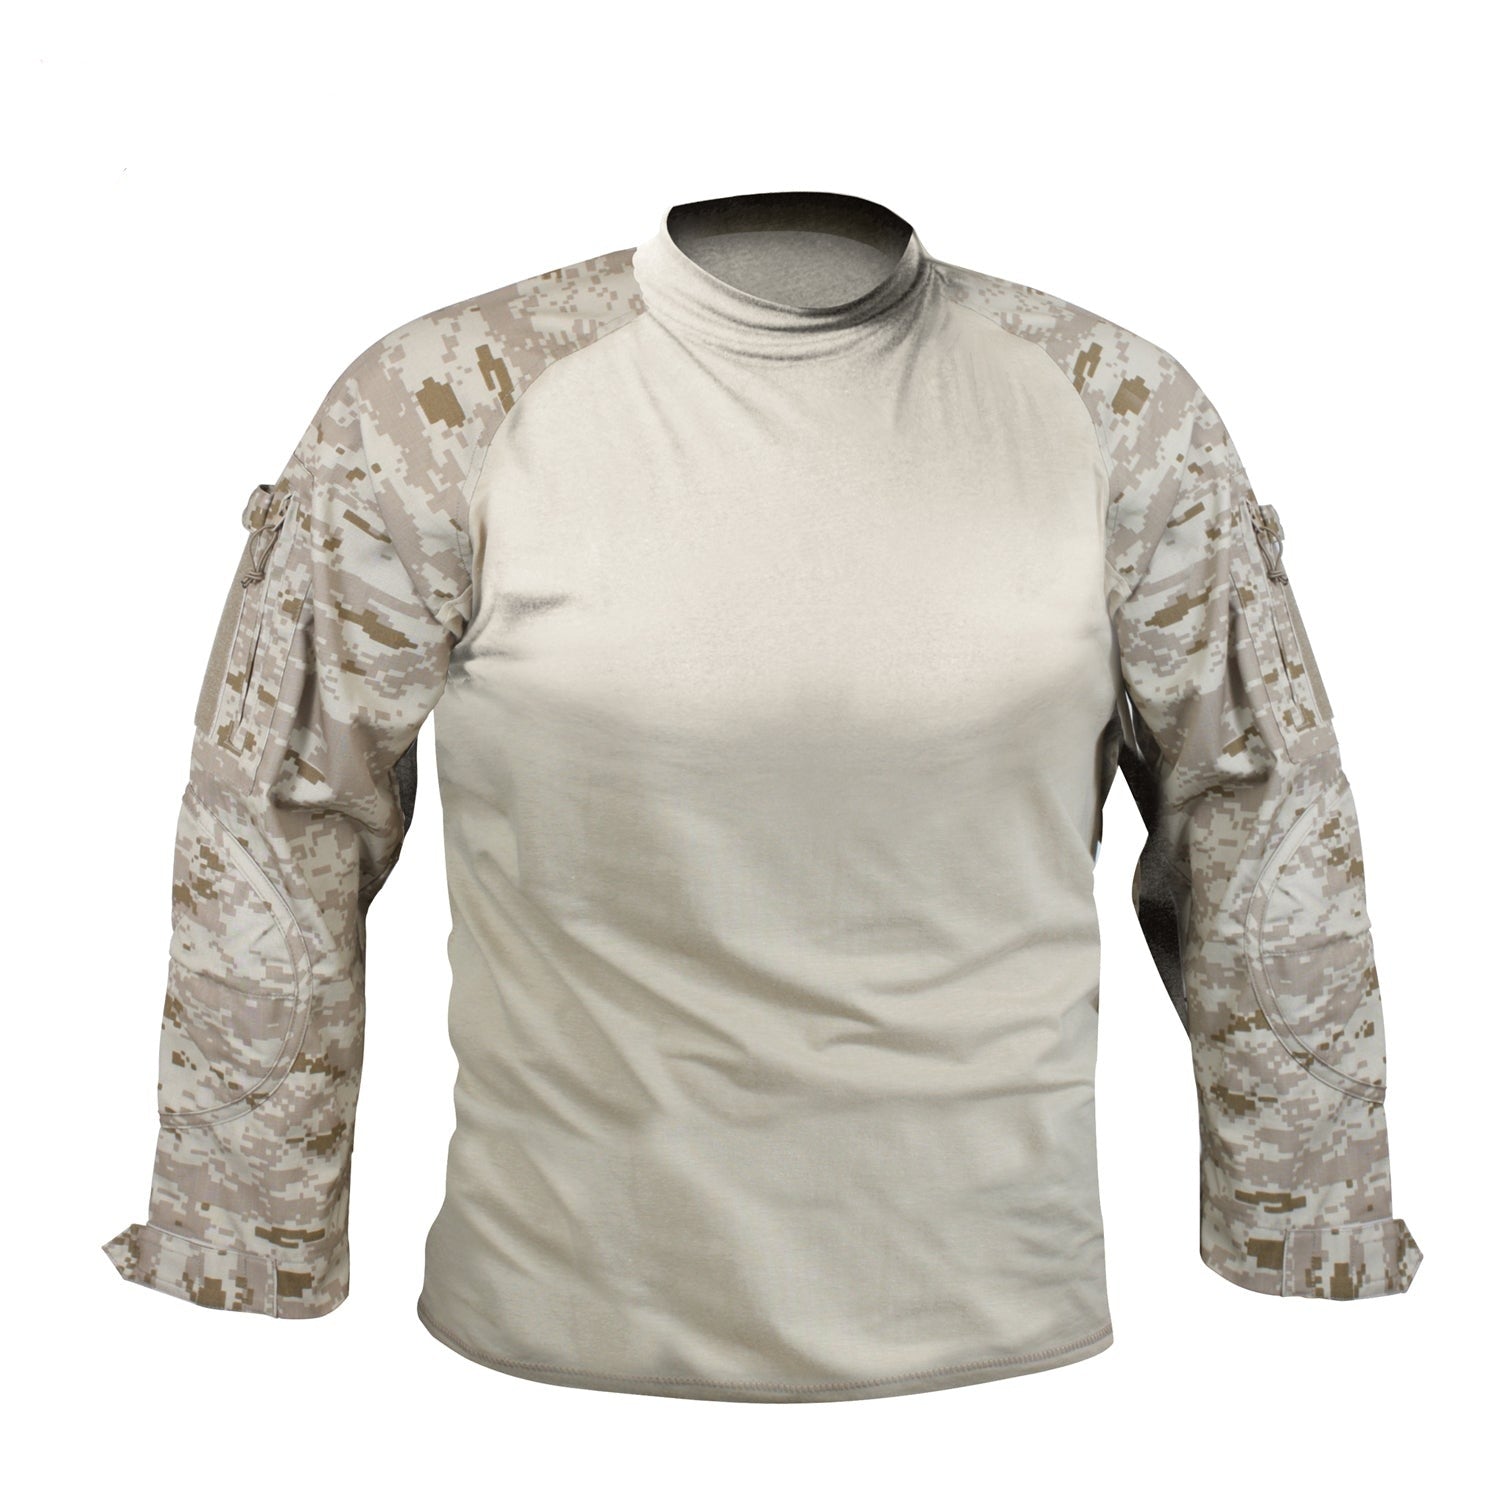 [Military][Fire Retardant] Digital Camo Acrylic/Cotton/Nylon/Cotton Combat Shirts Desert Digital Camo